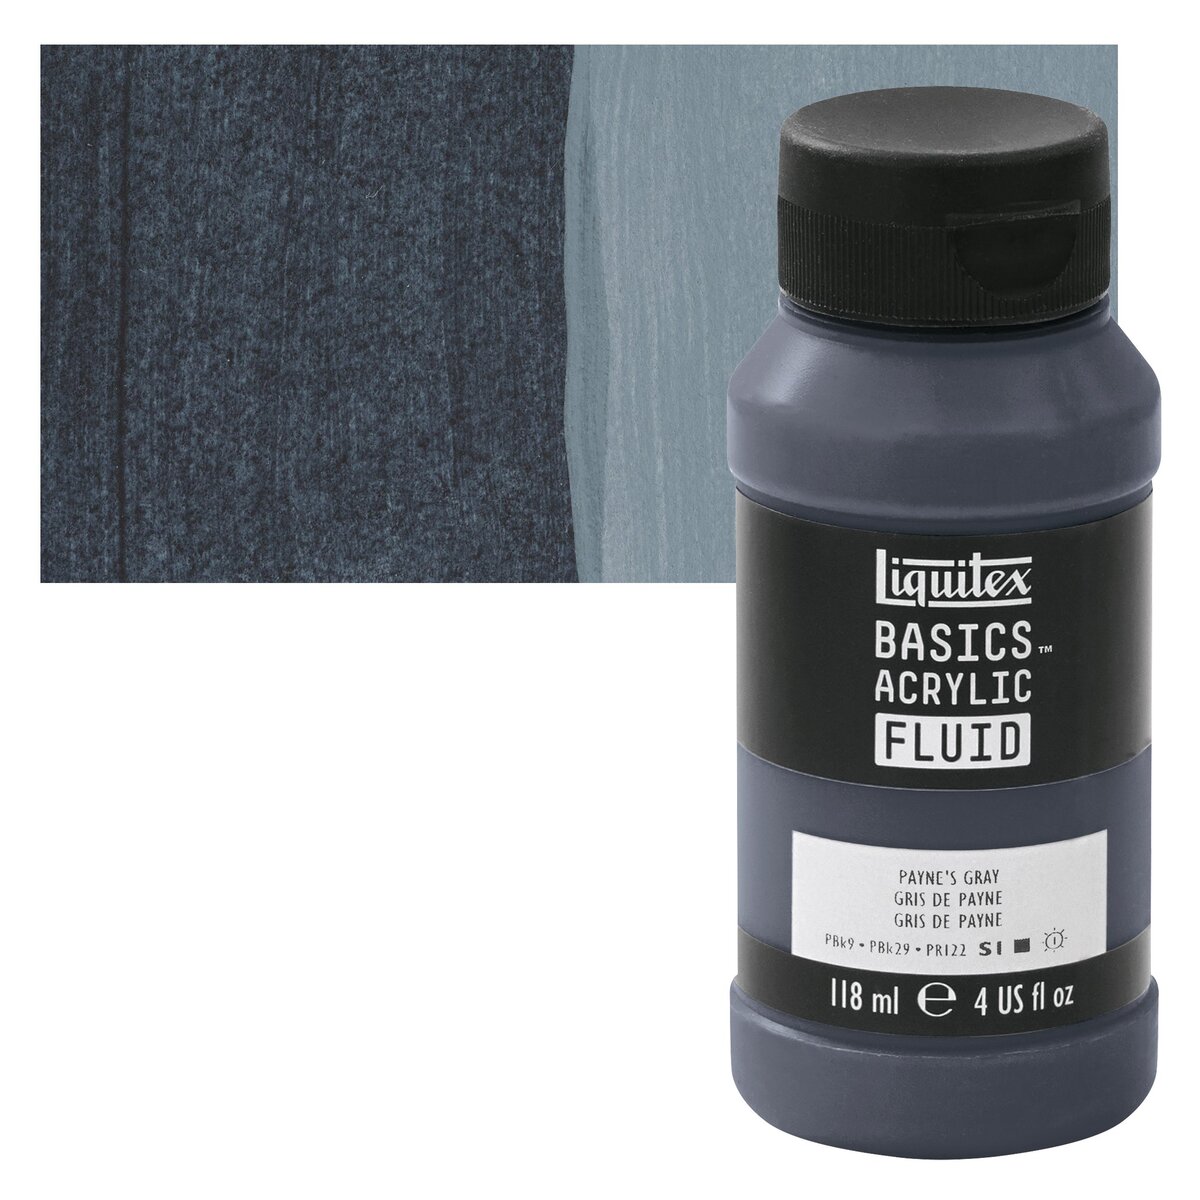 Liquitex Basics Acrylic Fluid Paint - Assorted Colors, Set of 12, 118 ml